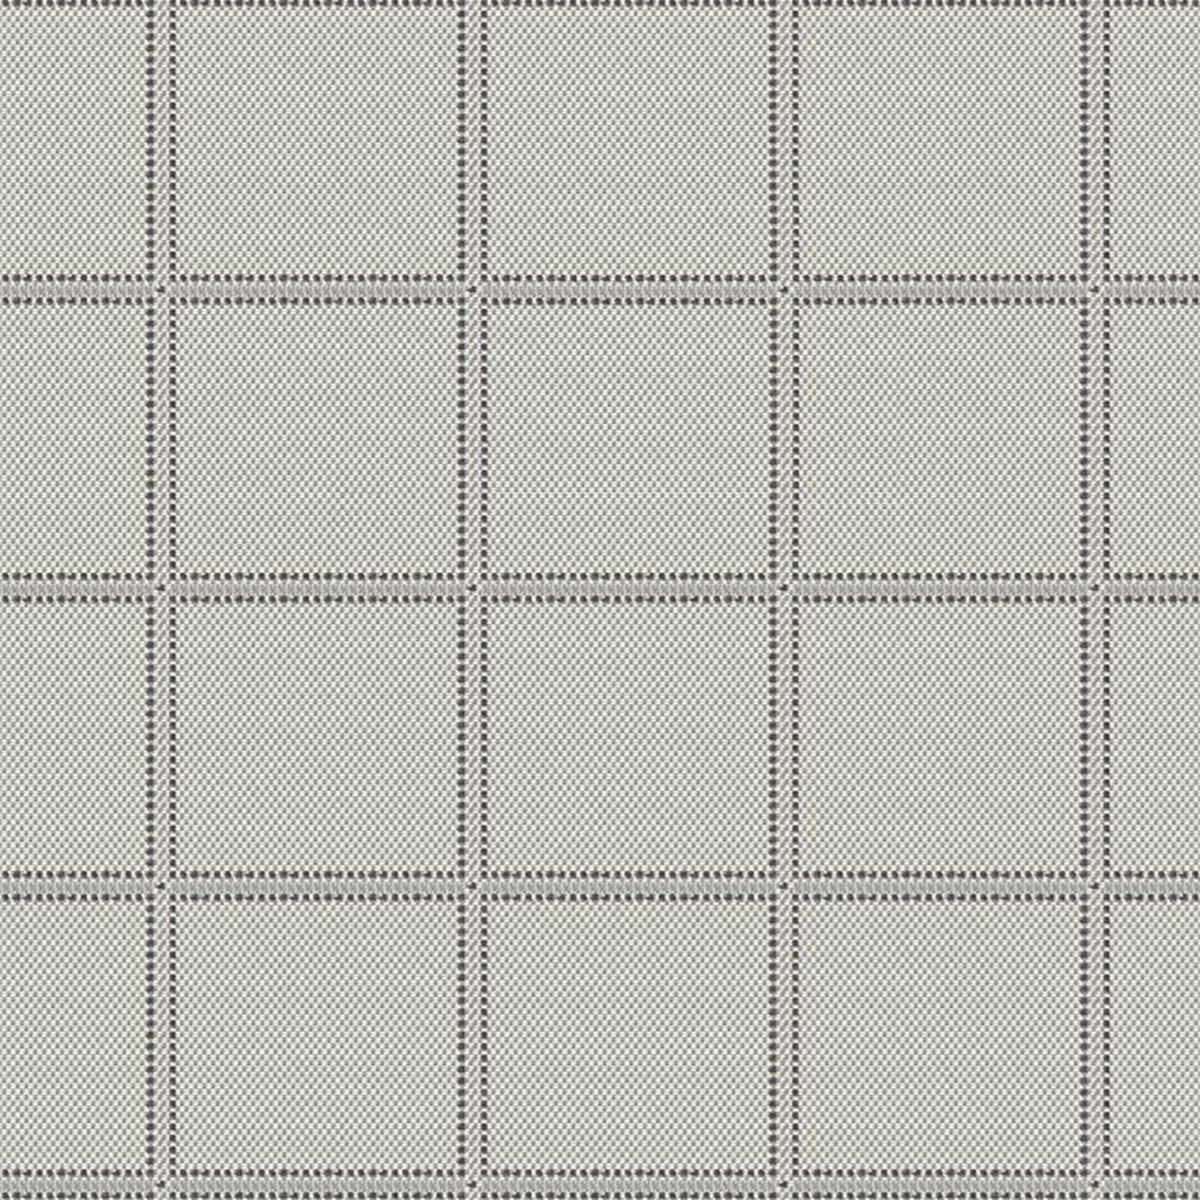 stitched grid chambray cushion for classic plantation rocker thumbnail image